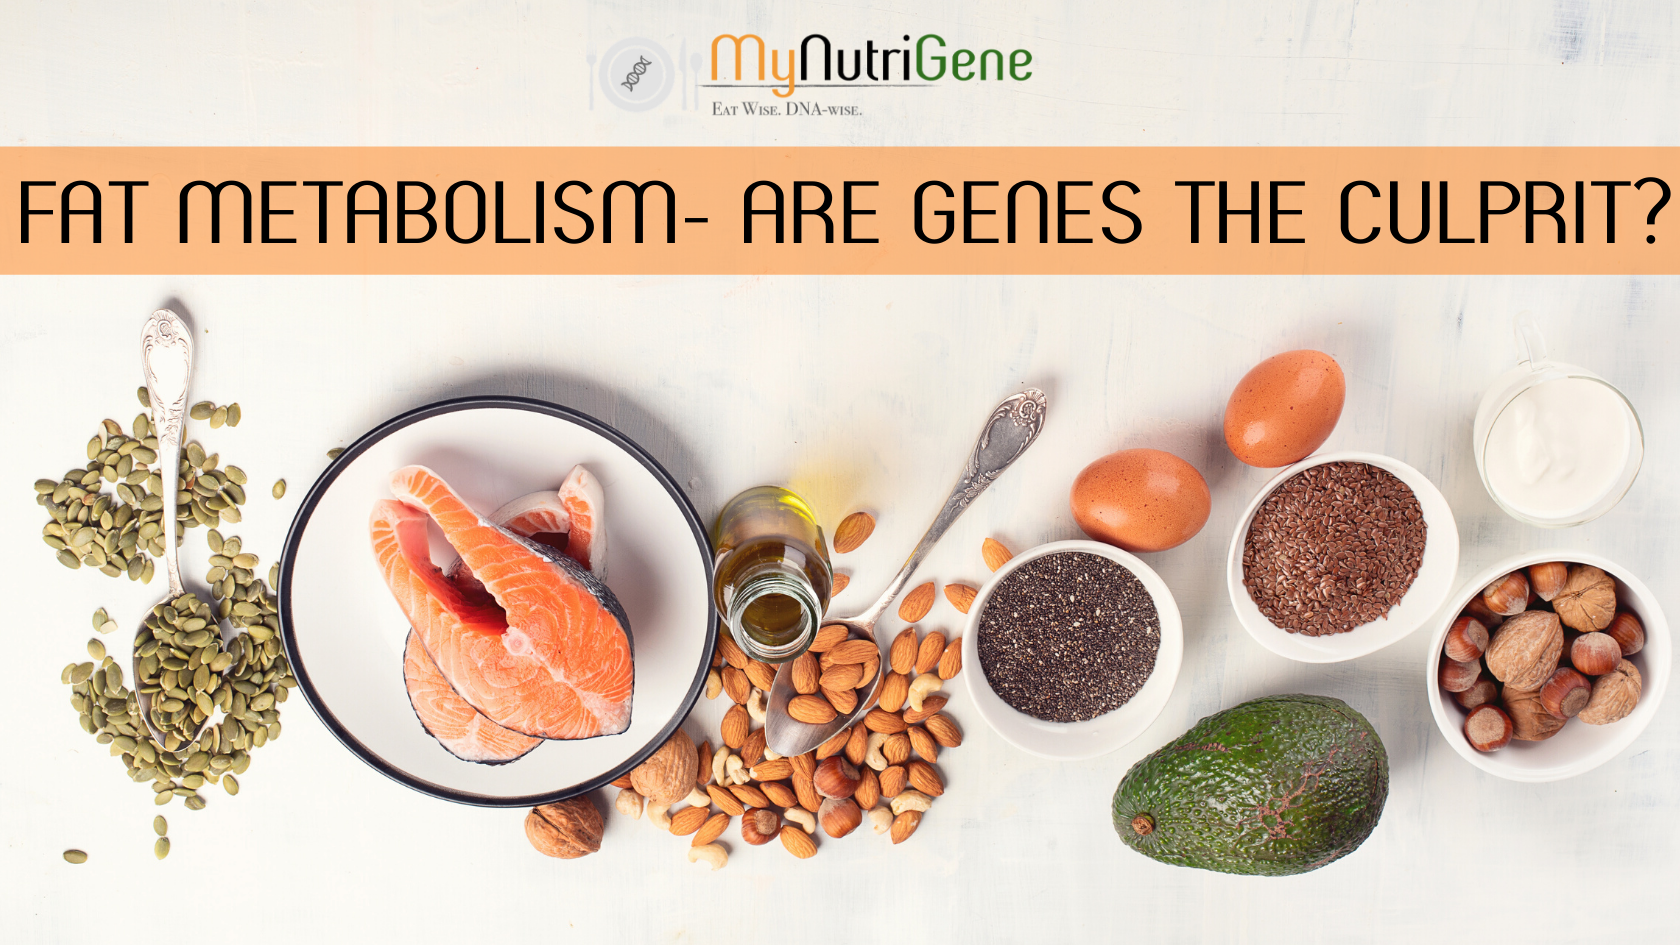 Fat Metabolism – Are GENES The Culprit?